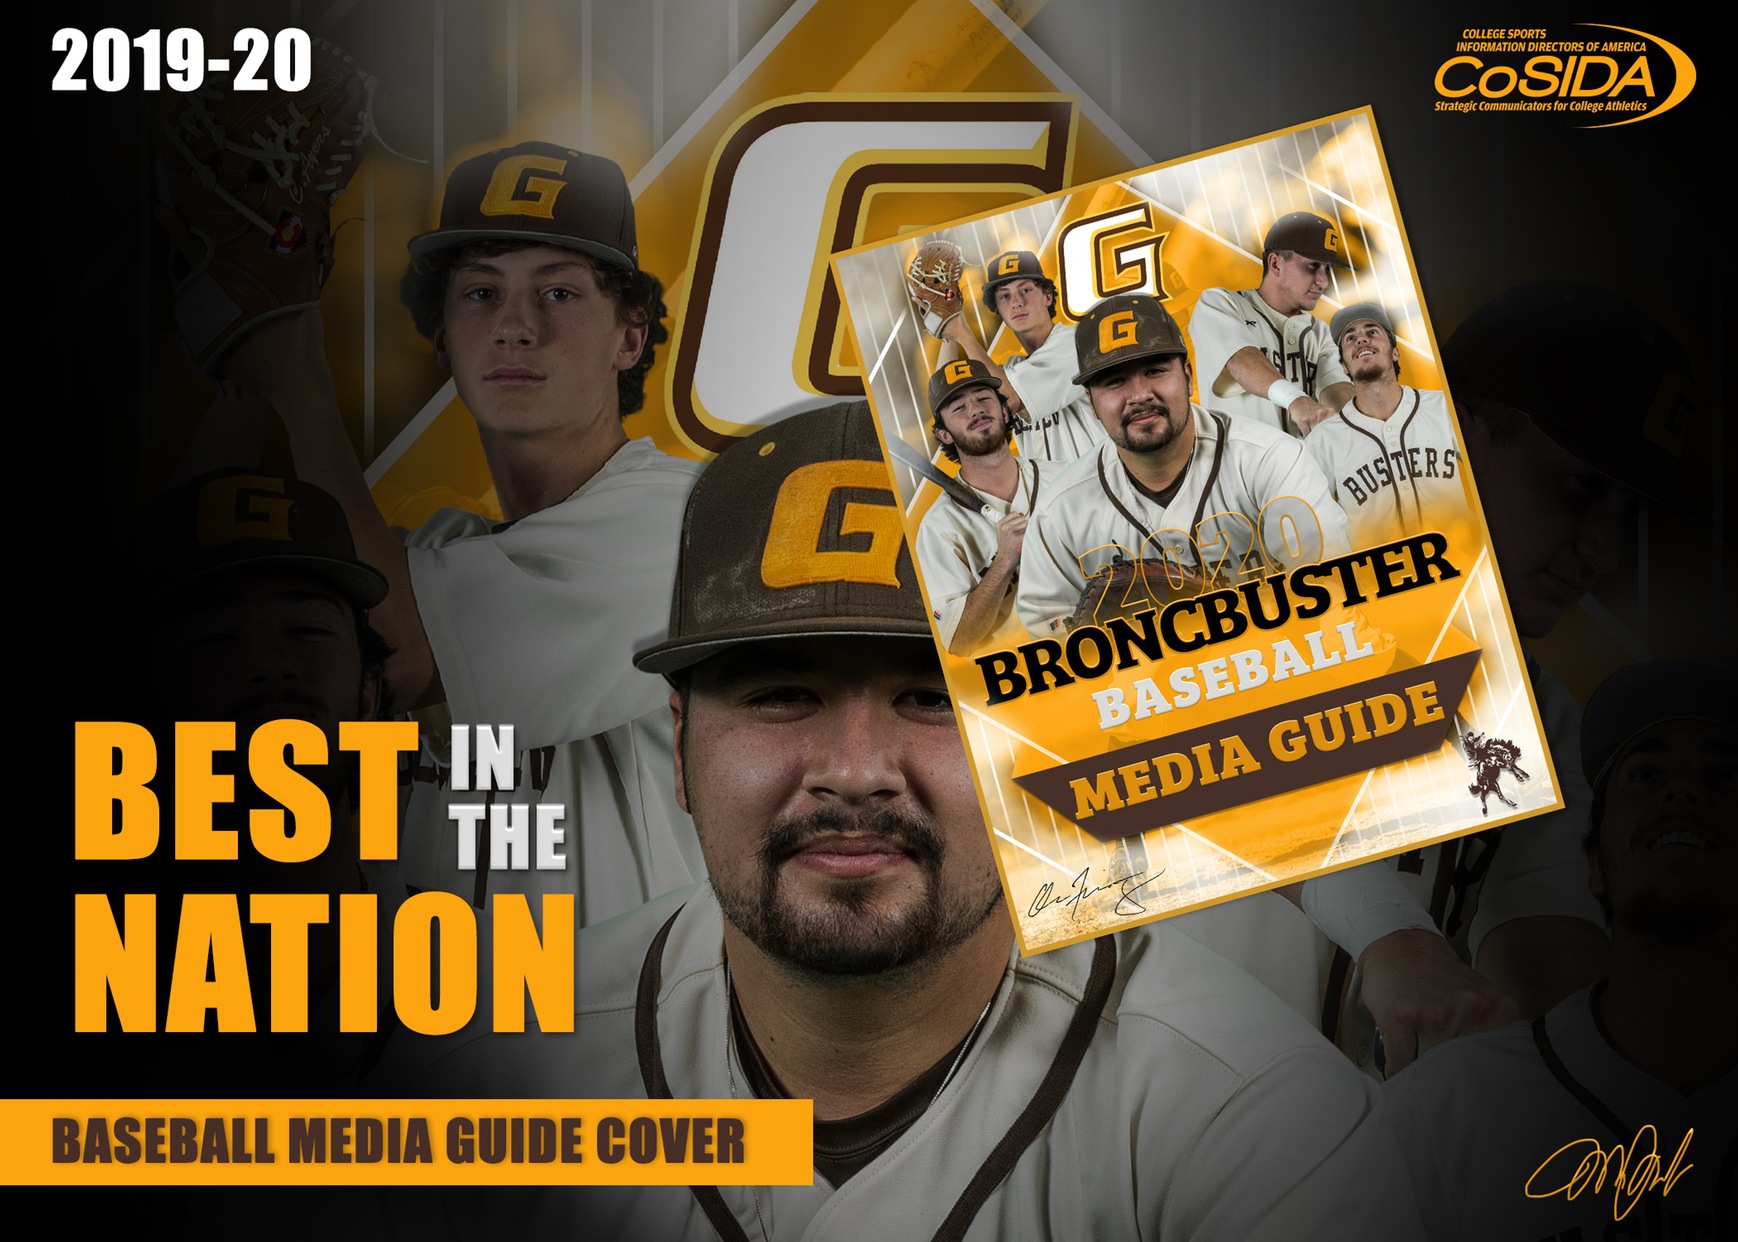 Baseball Media Guide Cover Wins National Award